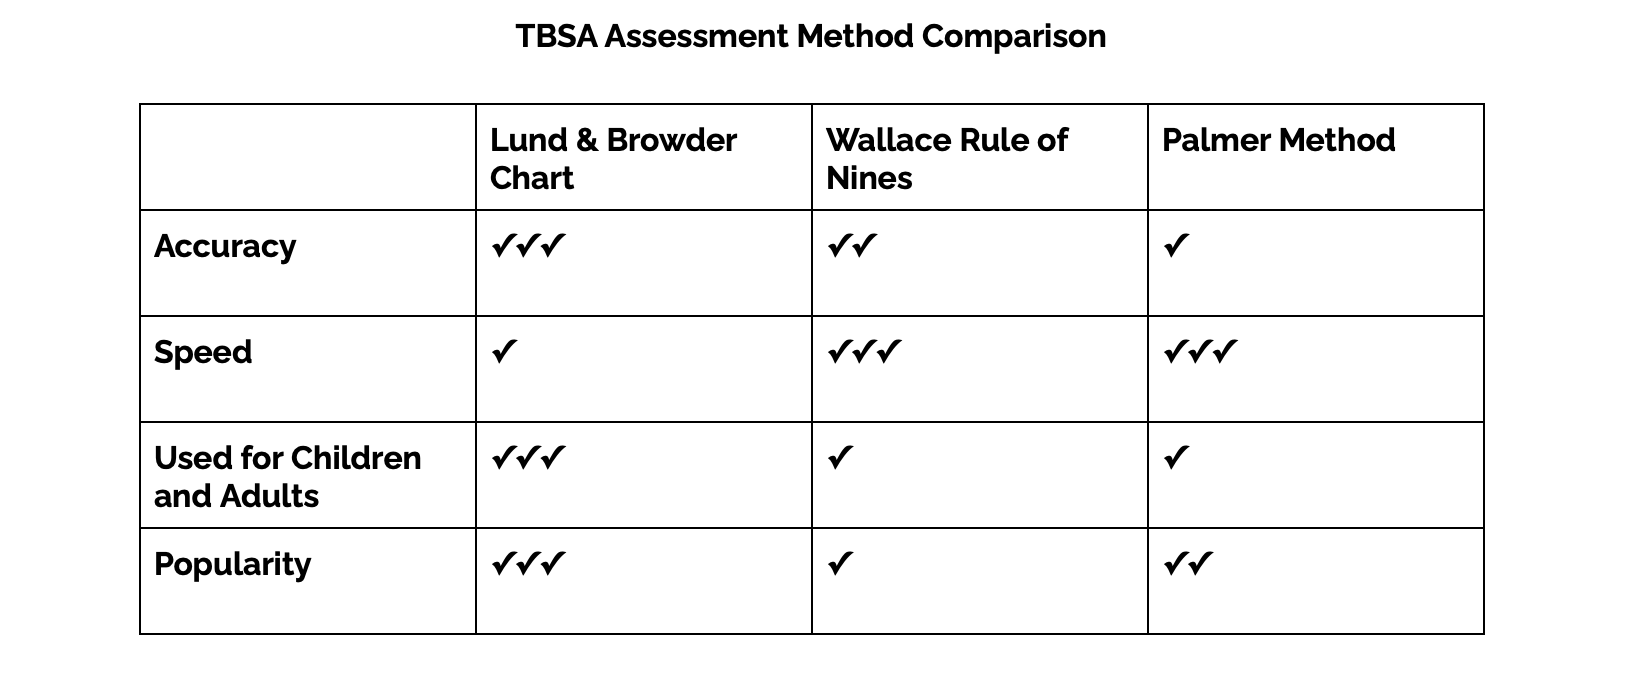 TBSA Assessment Method Comparison